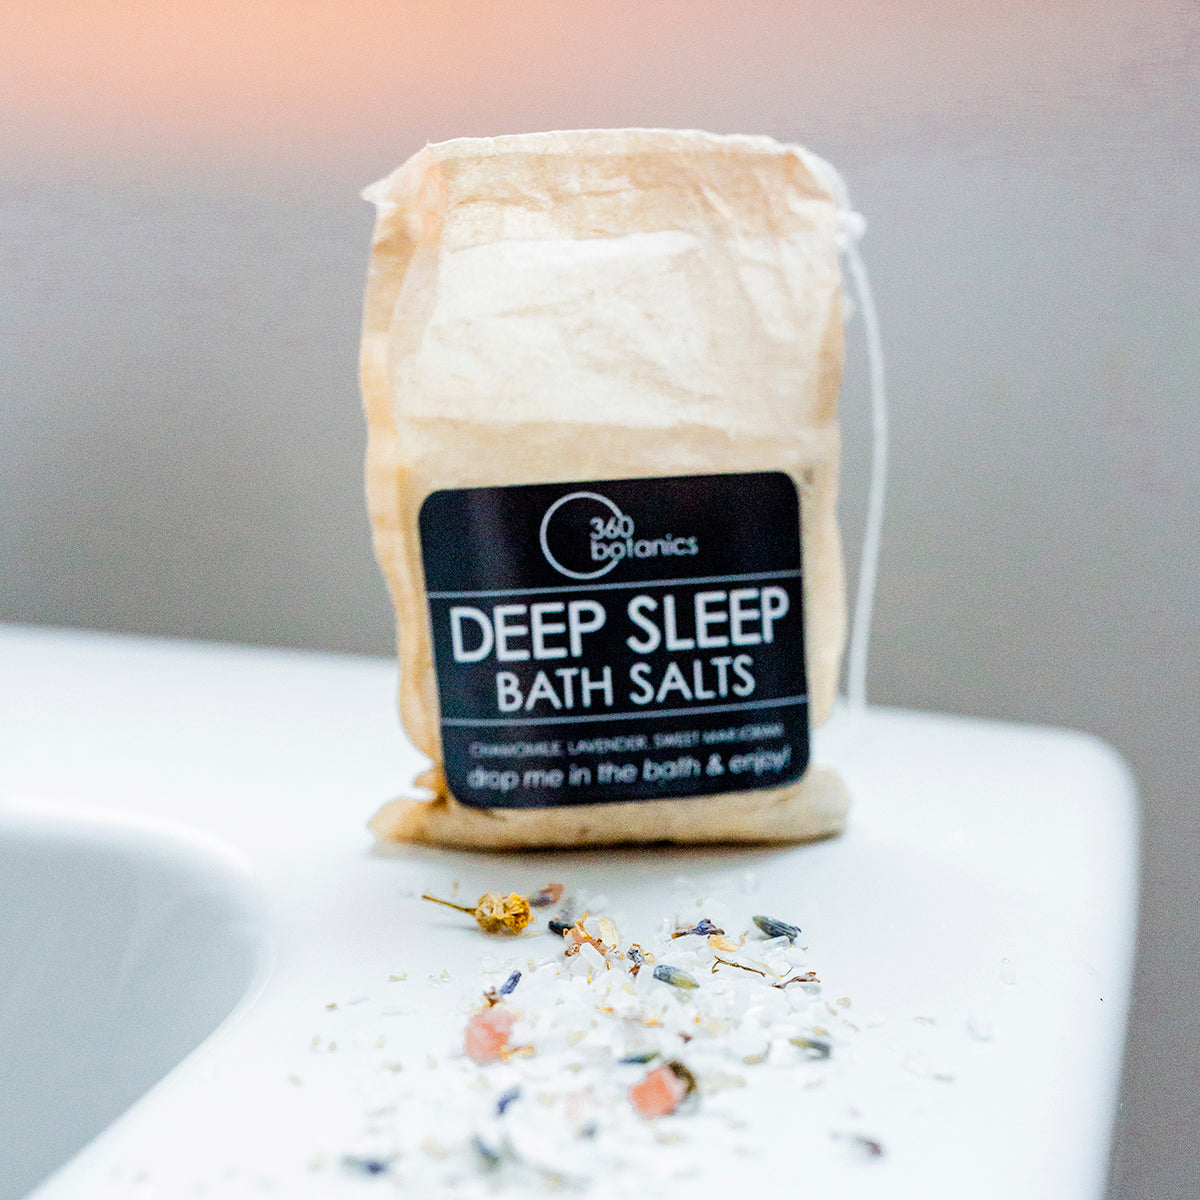 Deep Sleep bath salts sachet from sleep kit